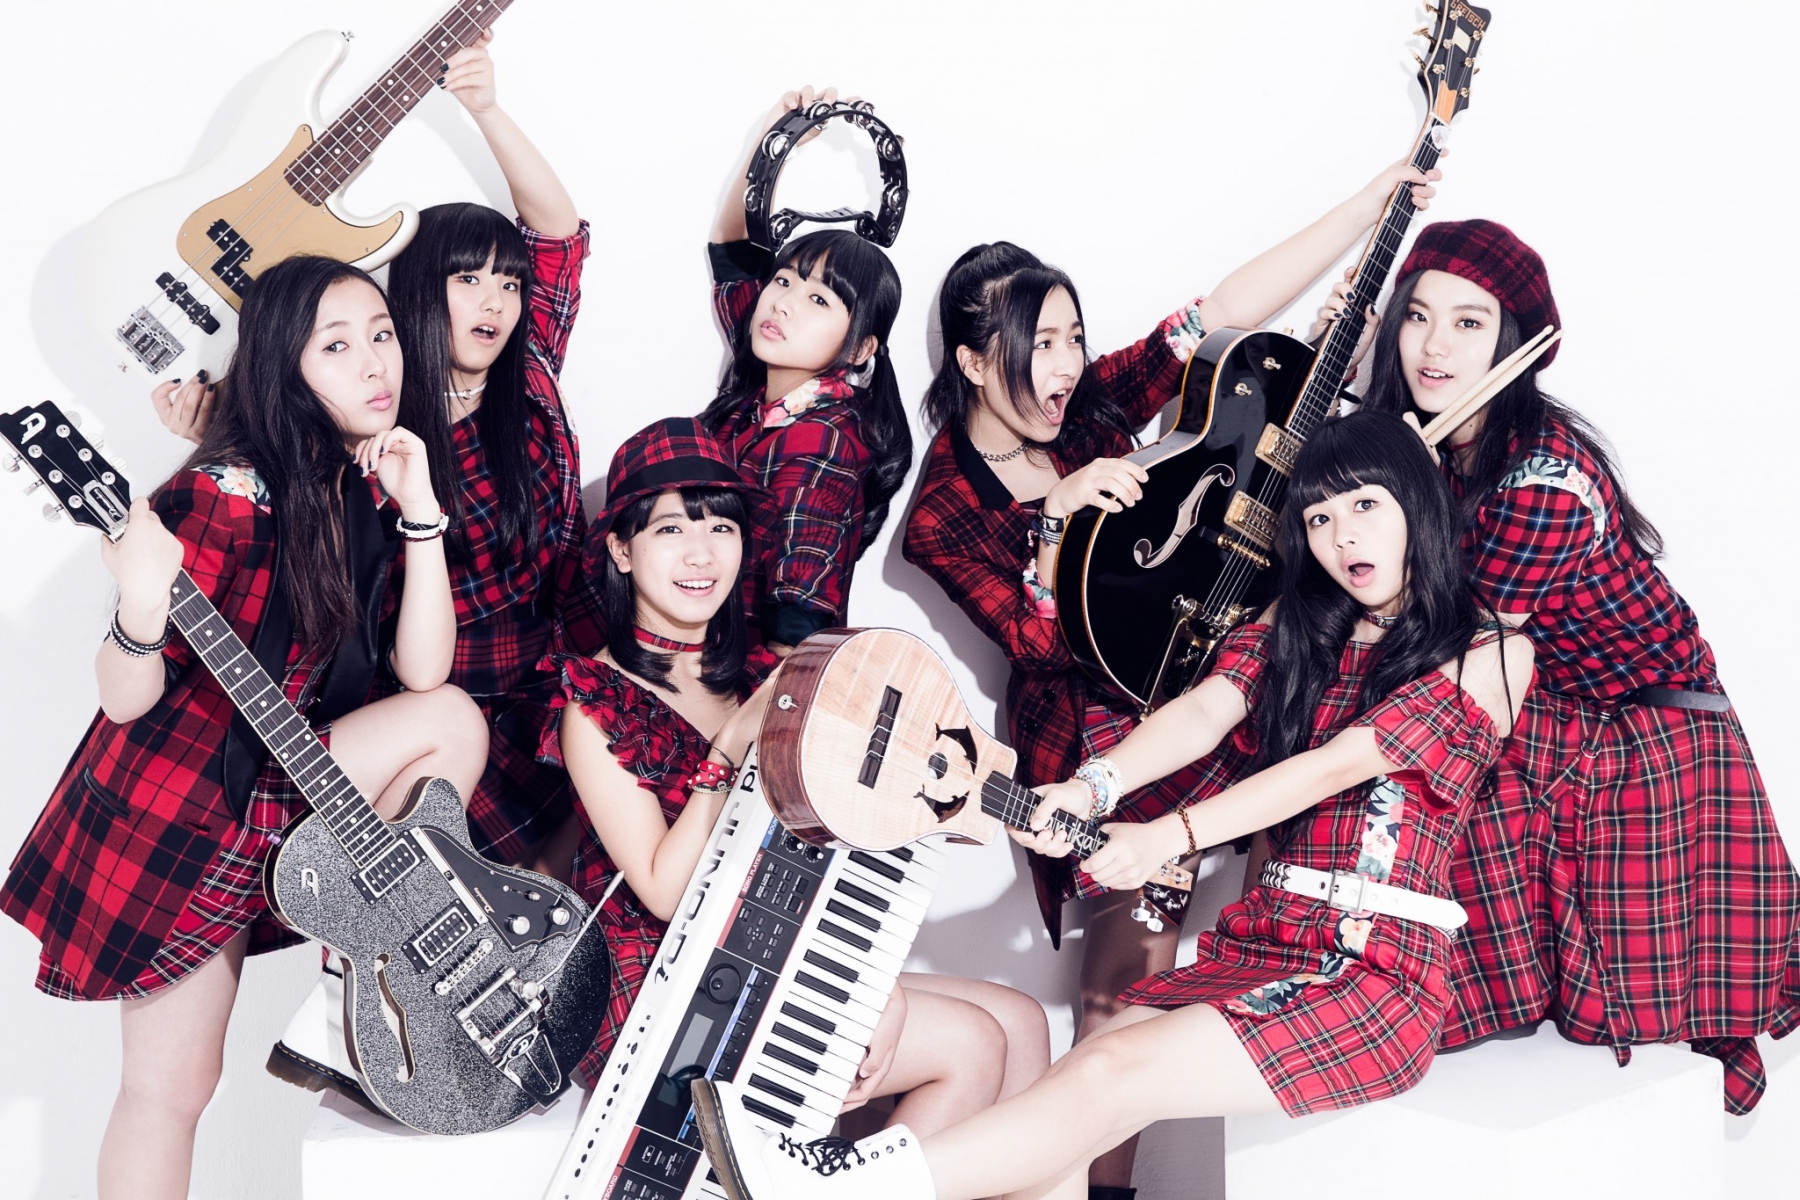 Must-check Girls Band of 2015 “KANIKAPILA” to make Major Debut in February!